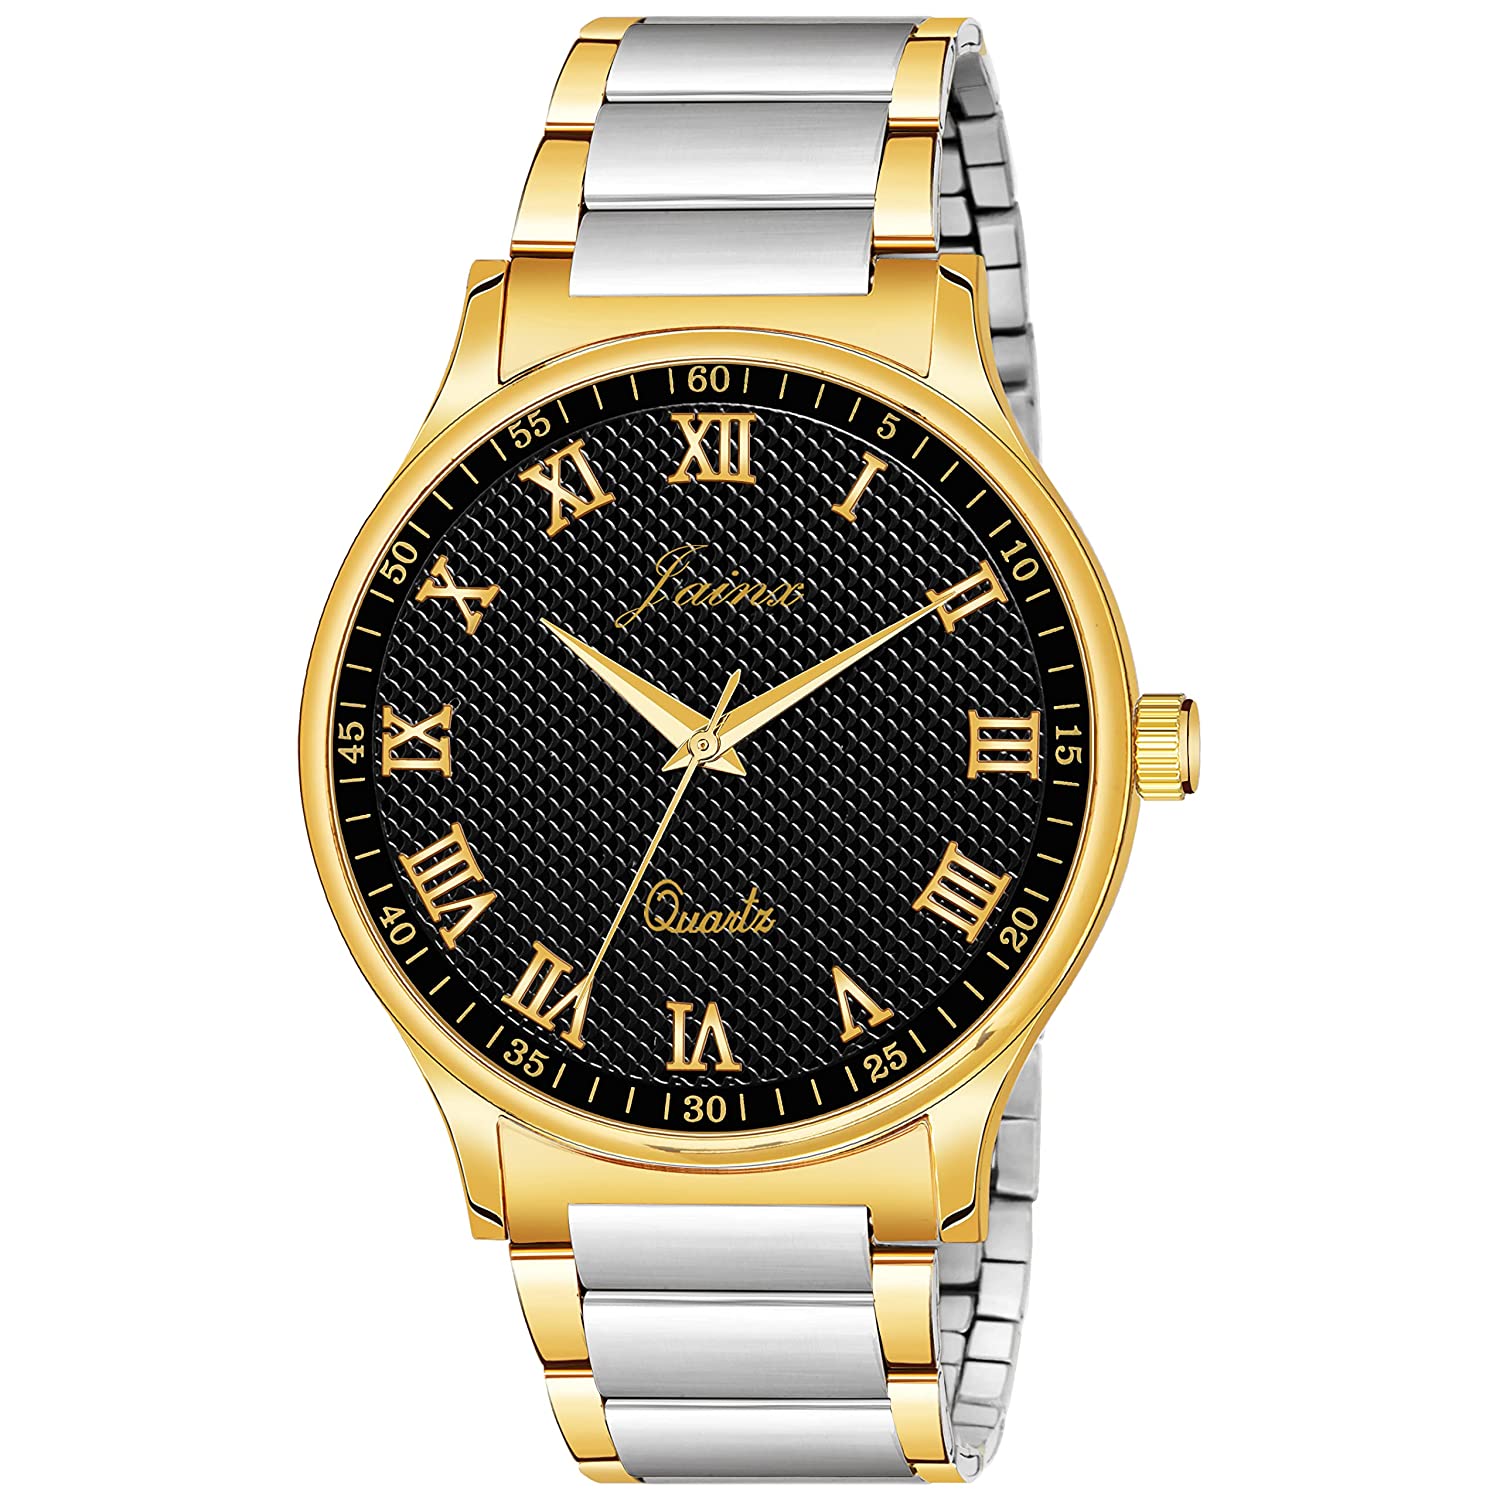 Premium Golden Slim Analog Watch - For Men JM1164 - Jainx Store